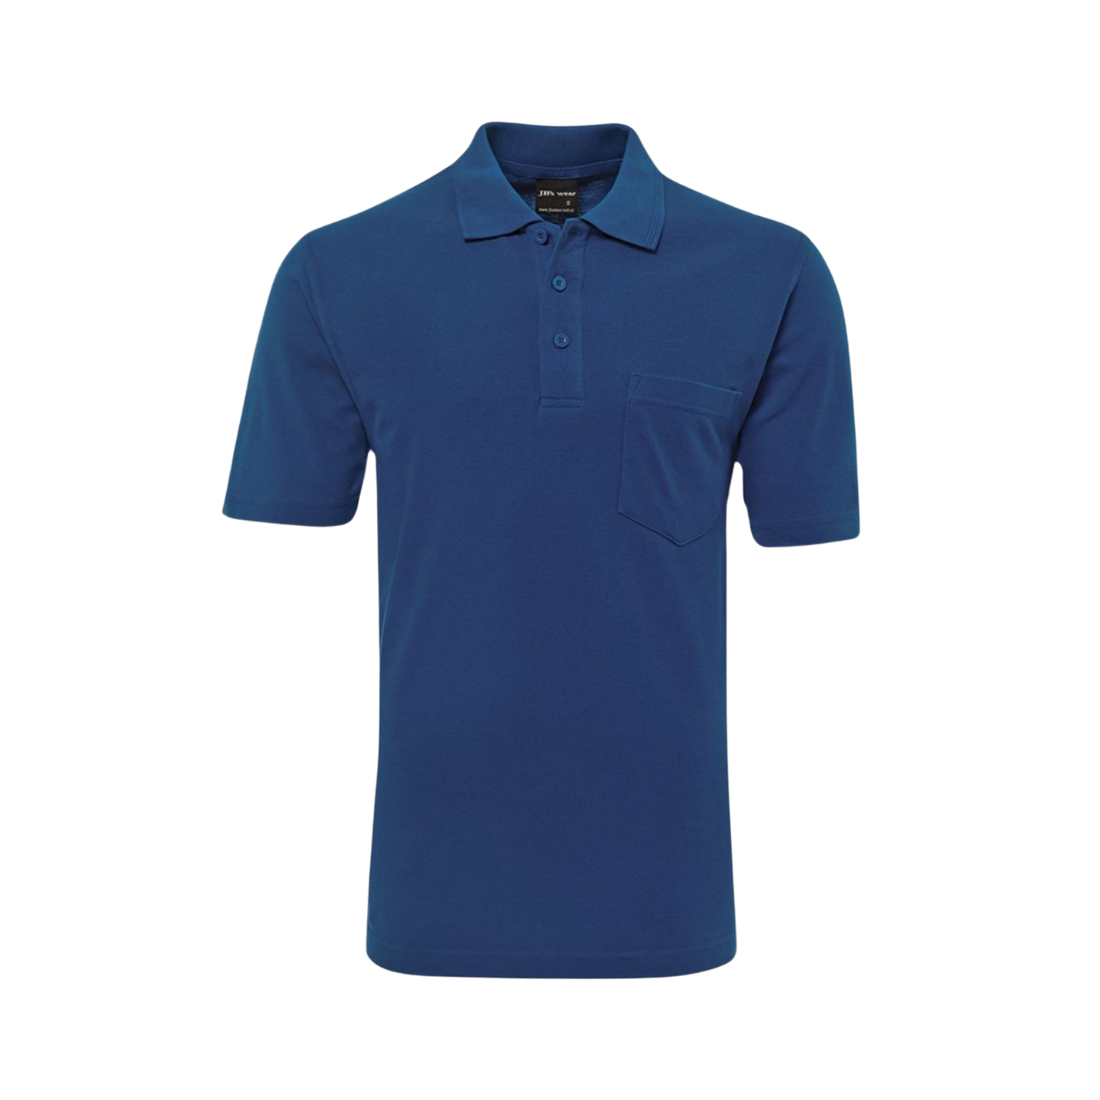 JBs Pocket Polo - Short Sleeve - LOADS OF COLOURS! M Royal Blue Mens Polo by JBs Wear | The Bloke Shop